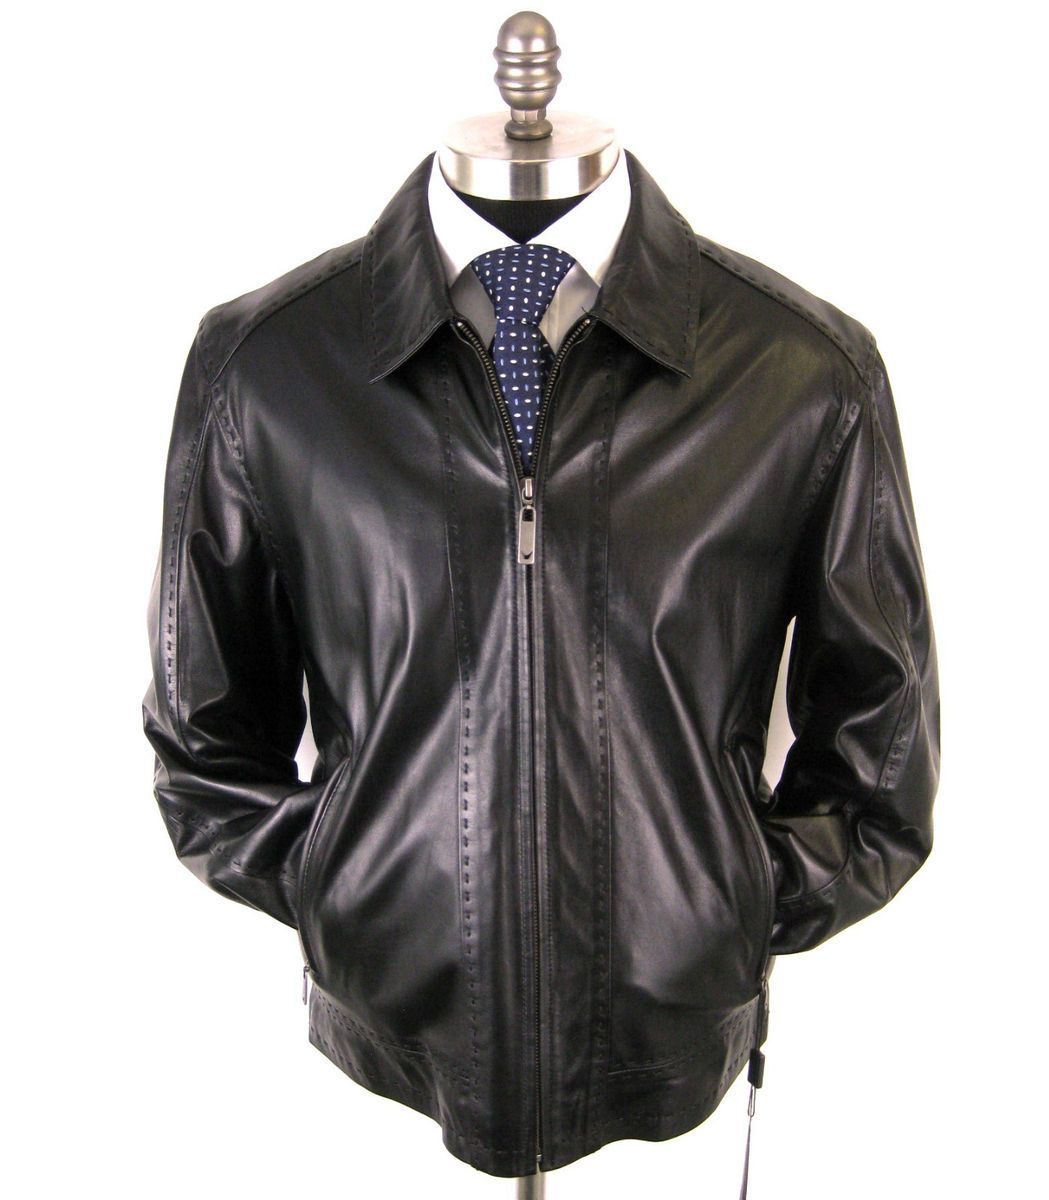 New DI BELLO Italy Black Lambskin Leather Coat Jacket 52 42R 42 L NWT 